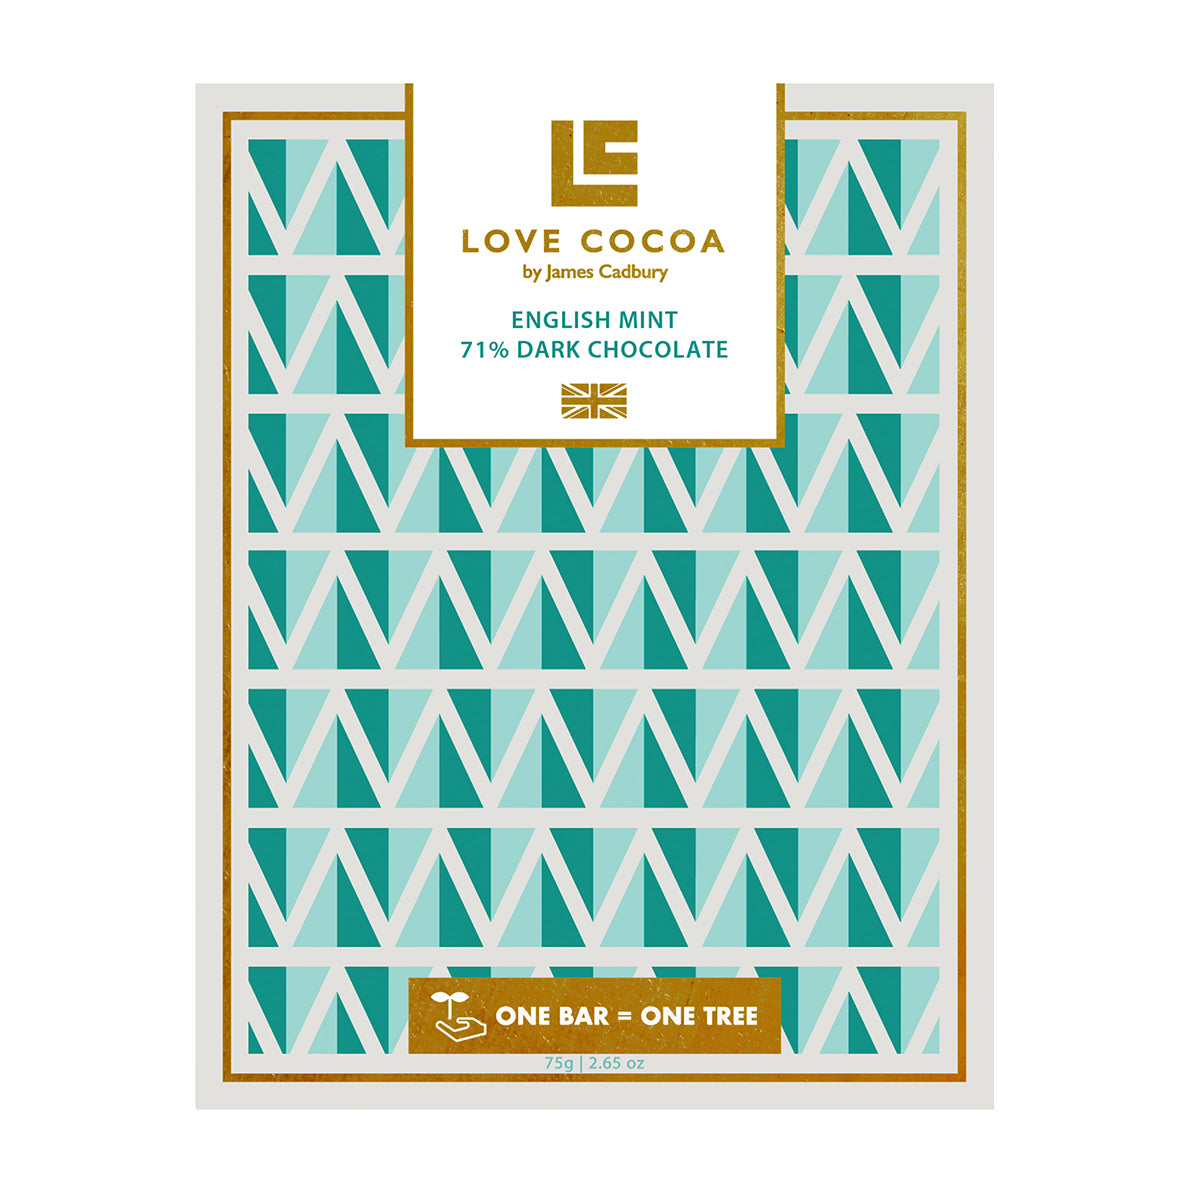 Love Cocoa Dark Chocolate English Mint